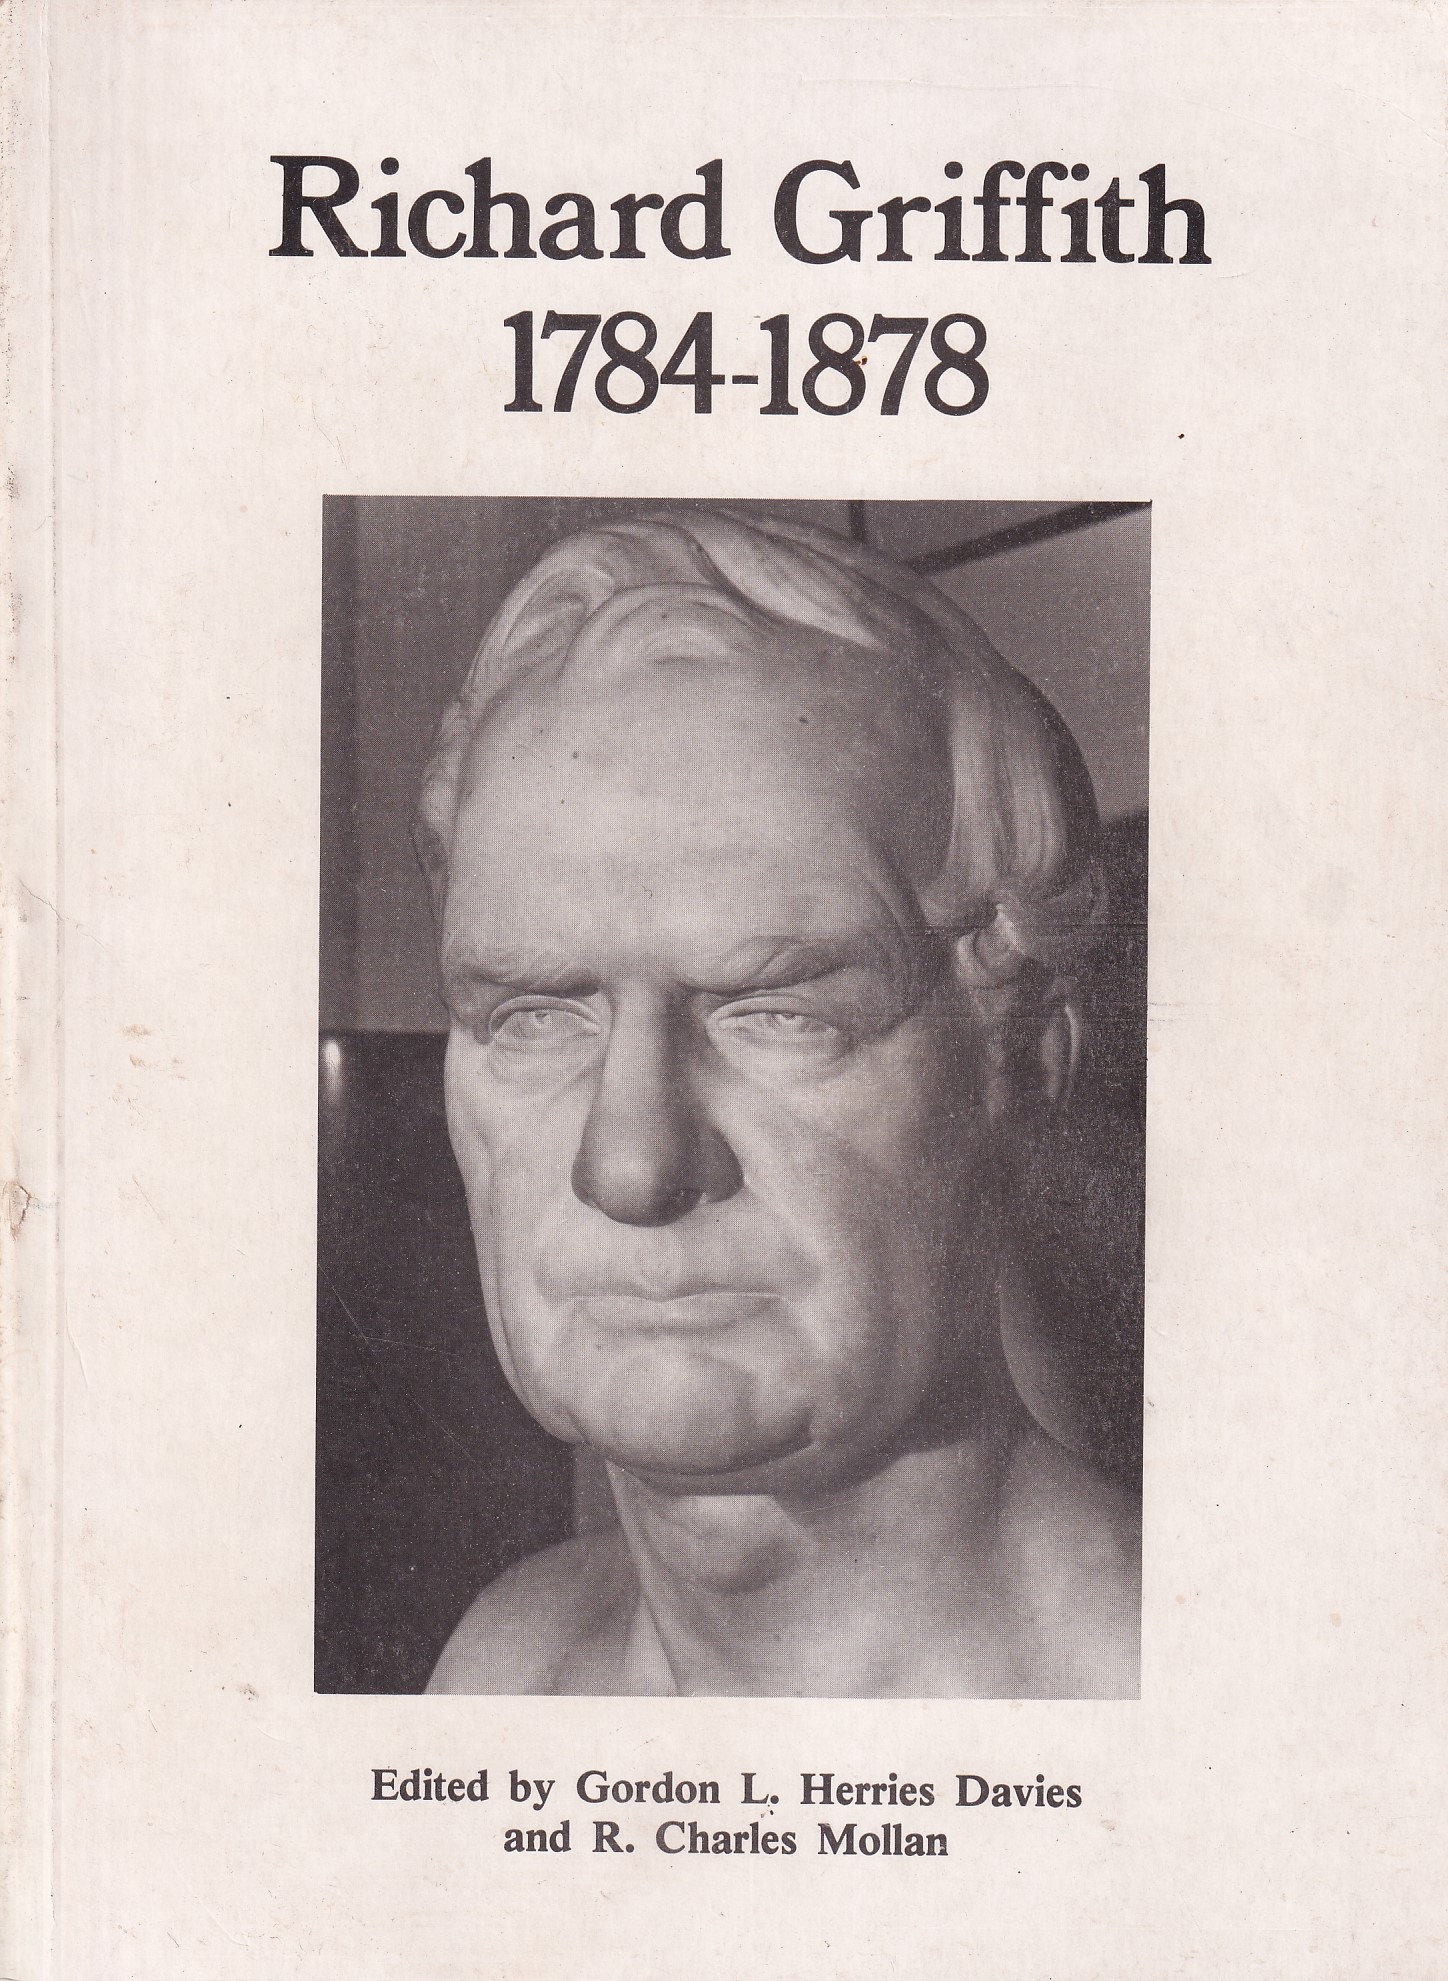 Richard Griffith: 1784-1878 | Gordon L. Herries Davies & R. Charles Mollan (eds.) | Charlie Byrne's